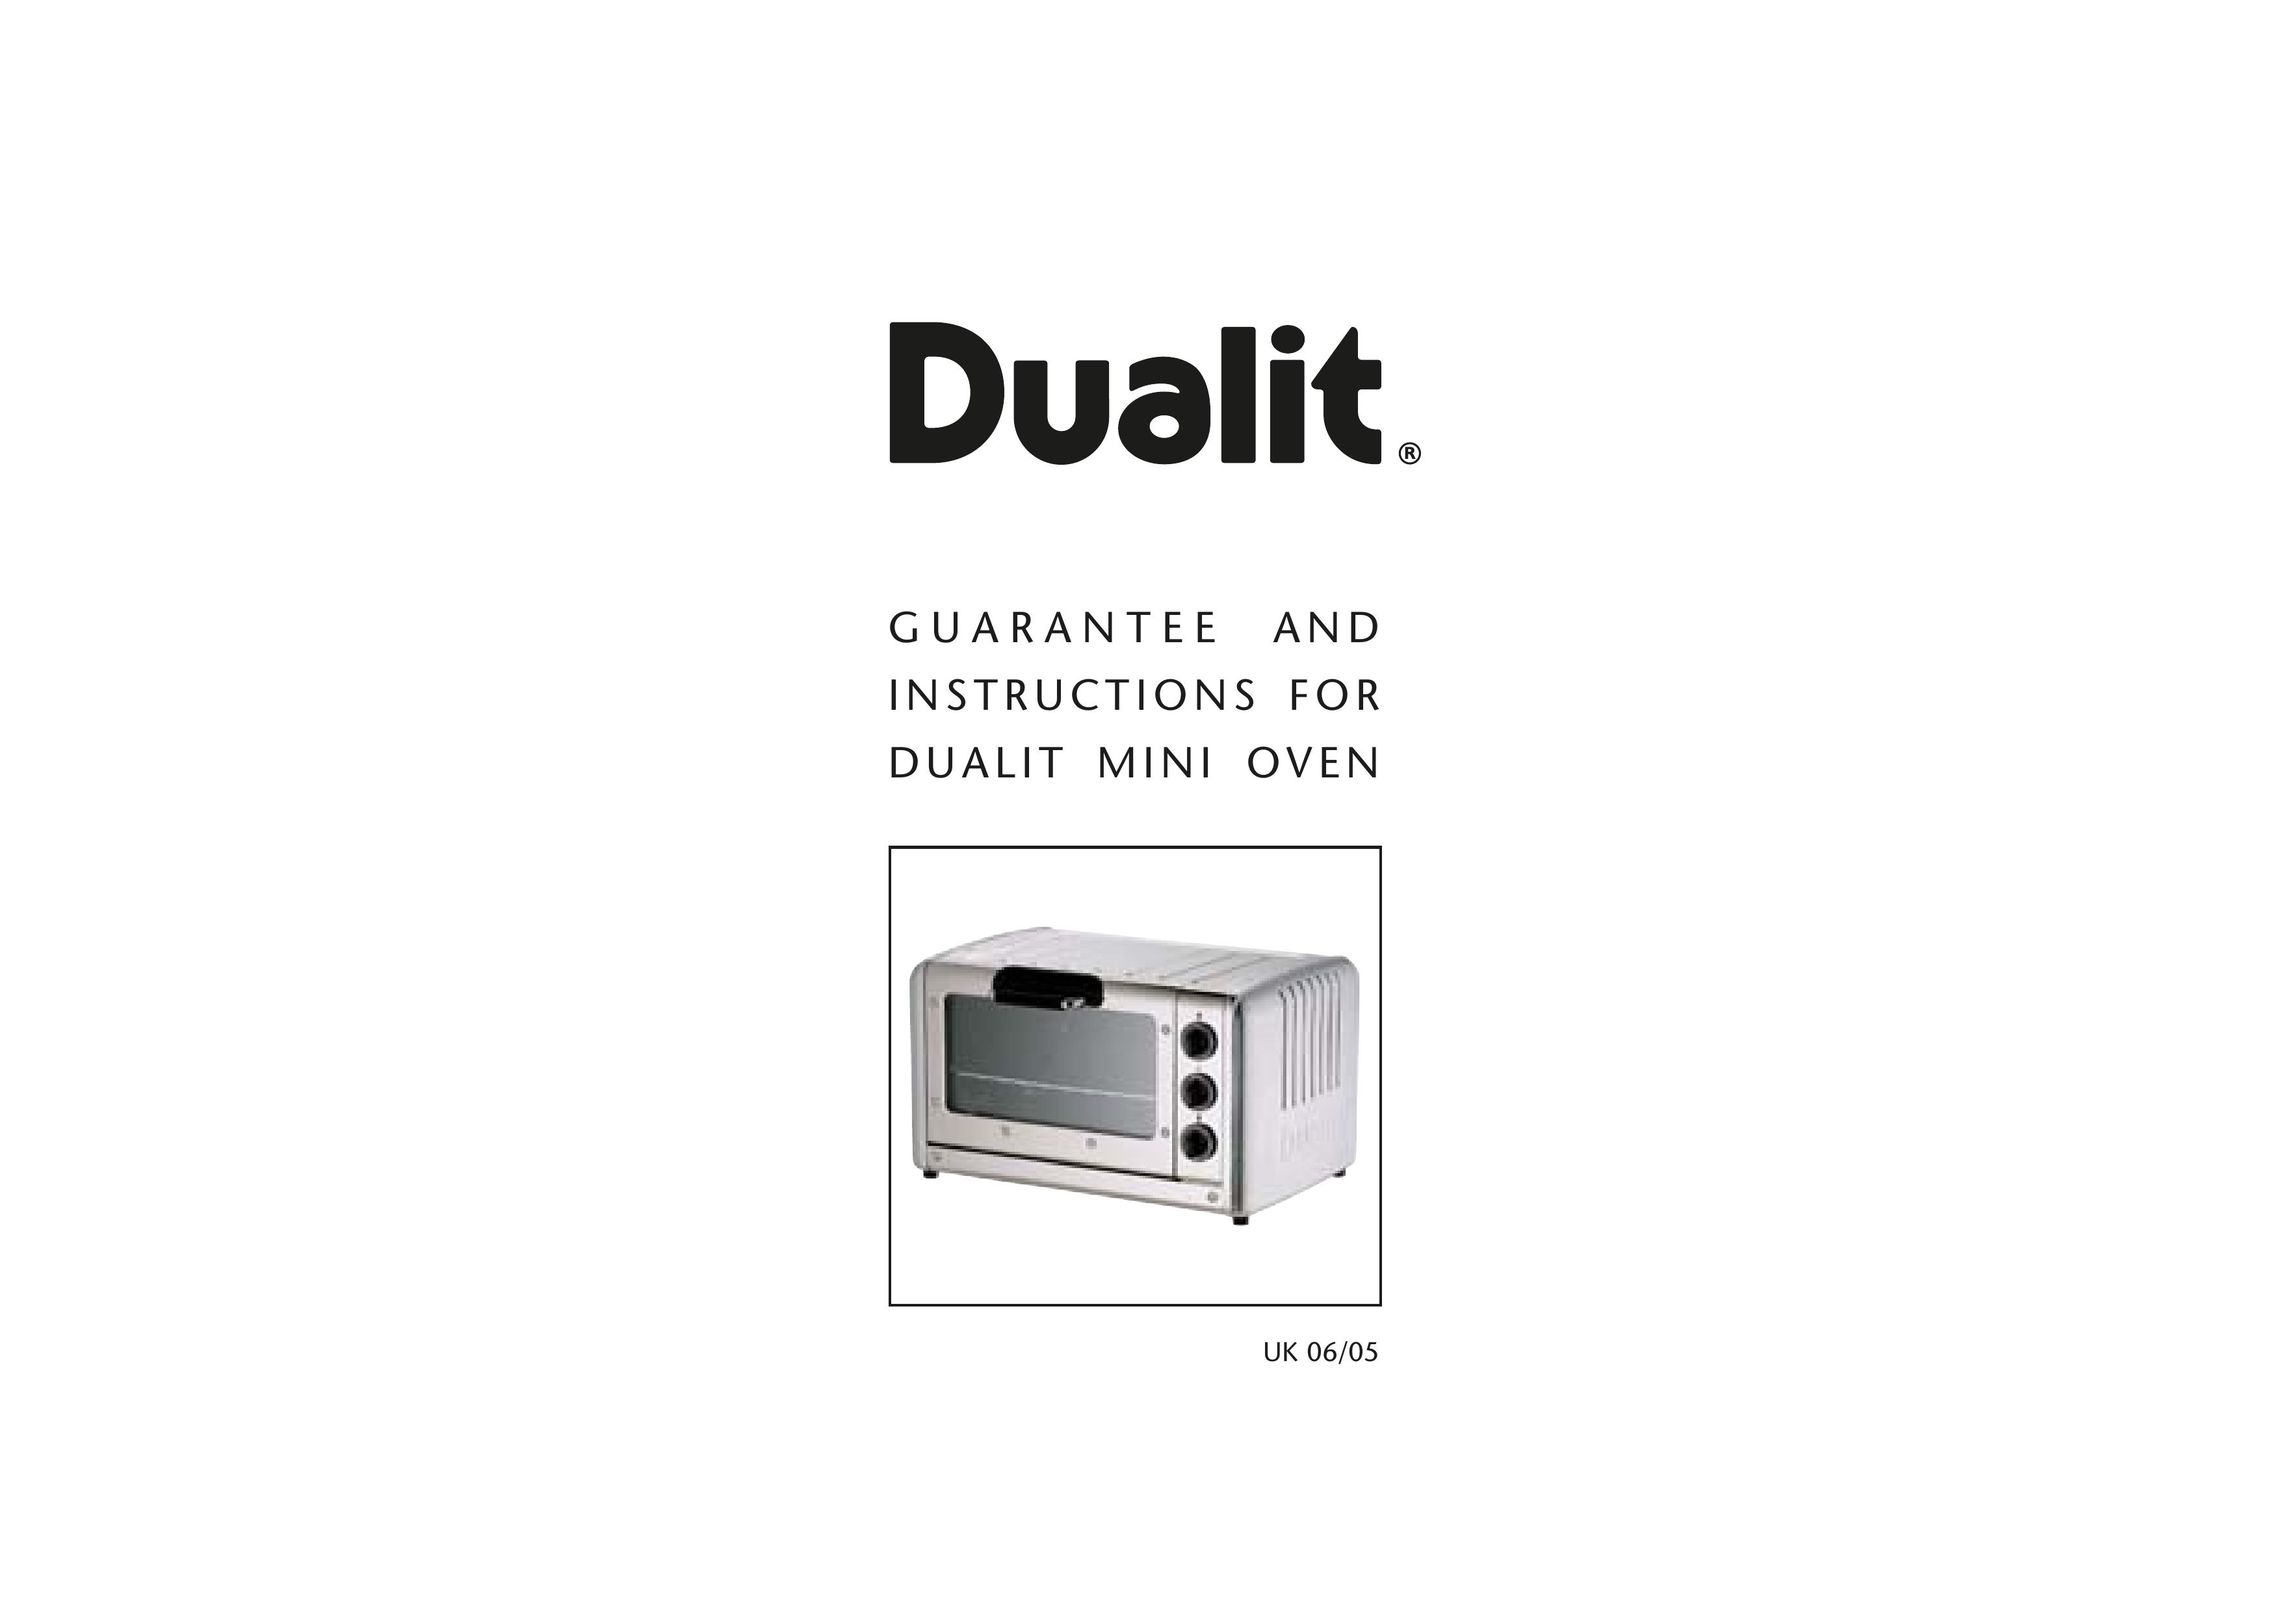 Dualit UK 06/05 Microwave Oven User Manual